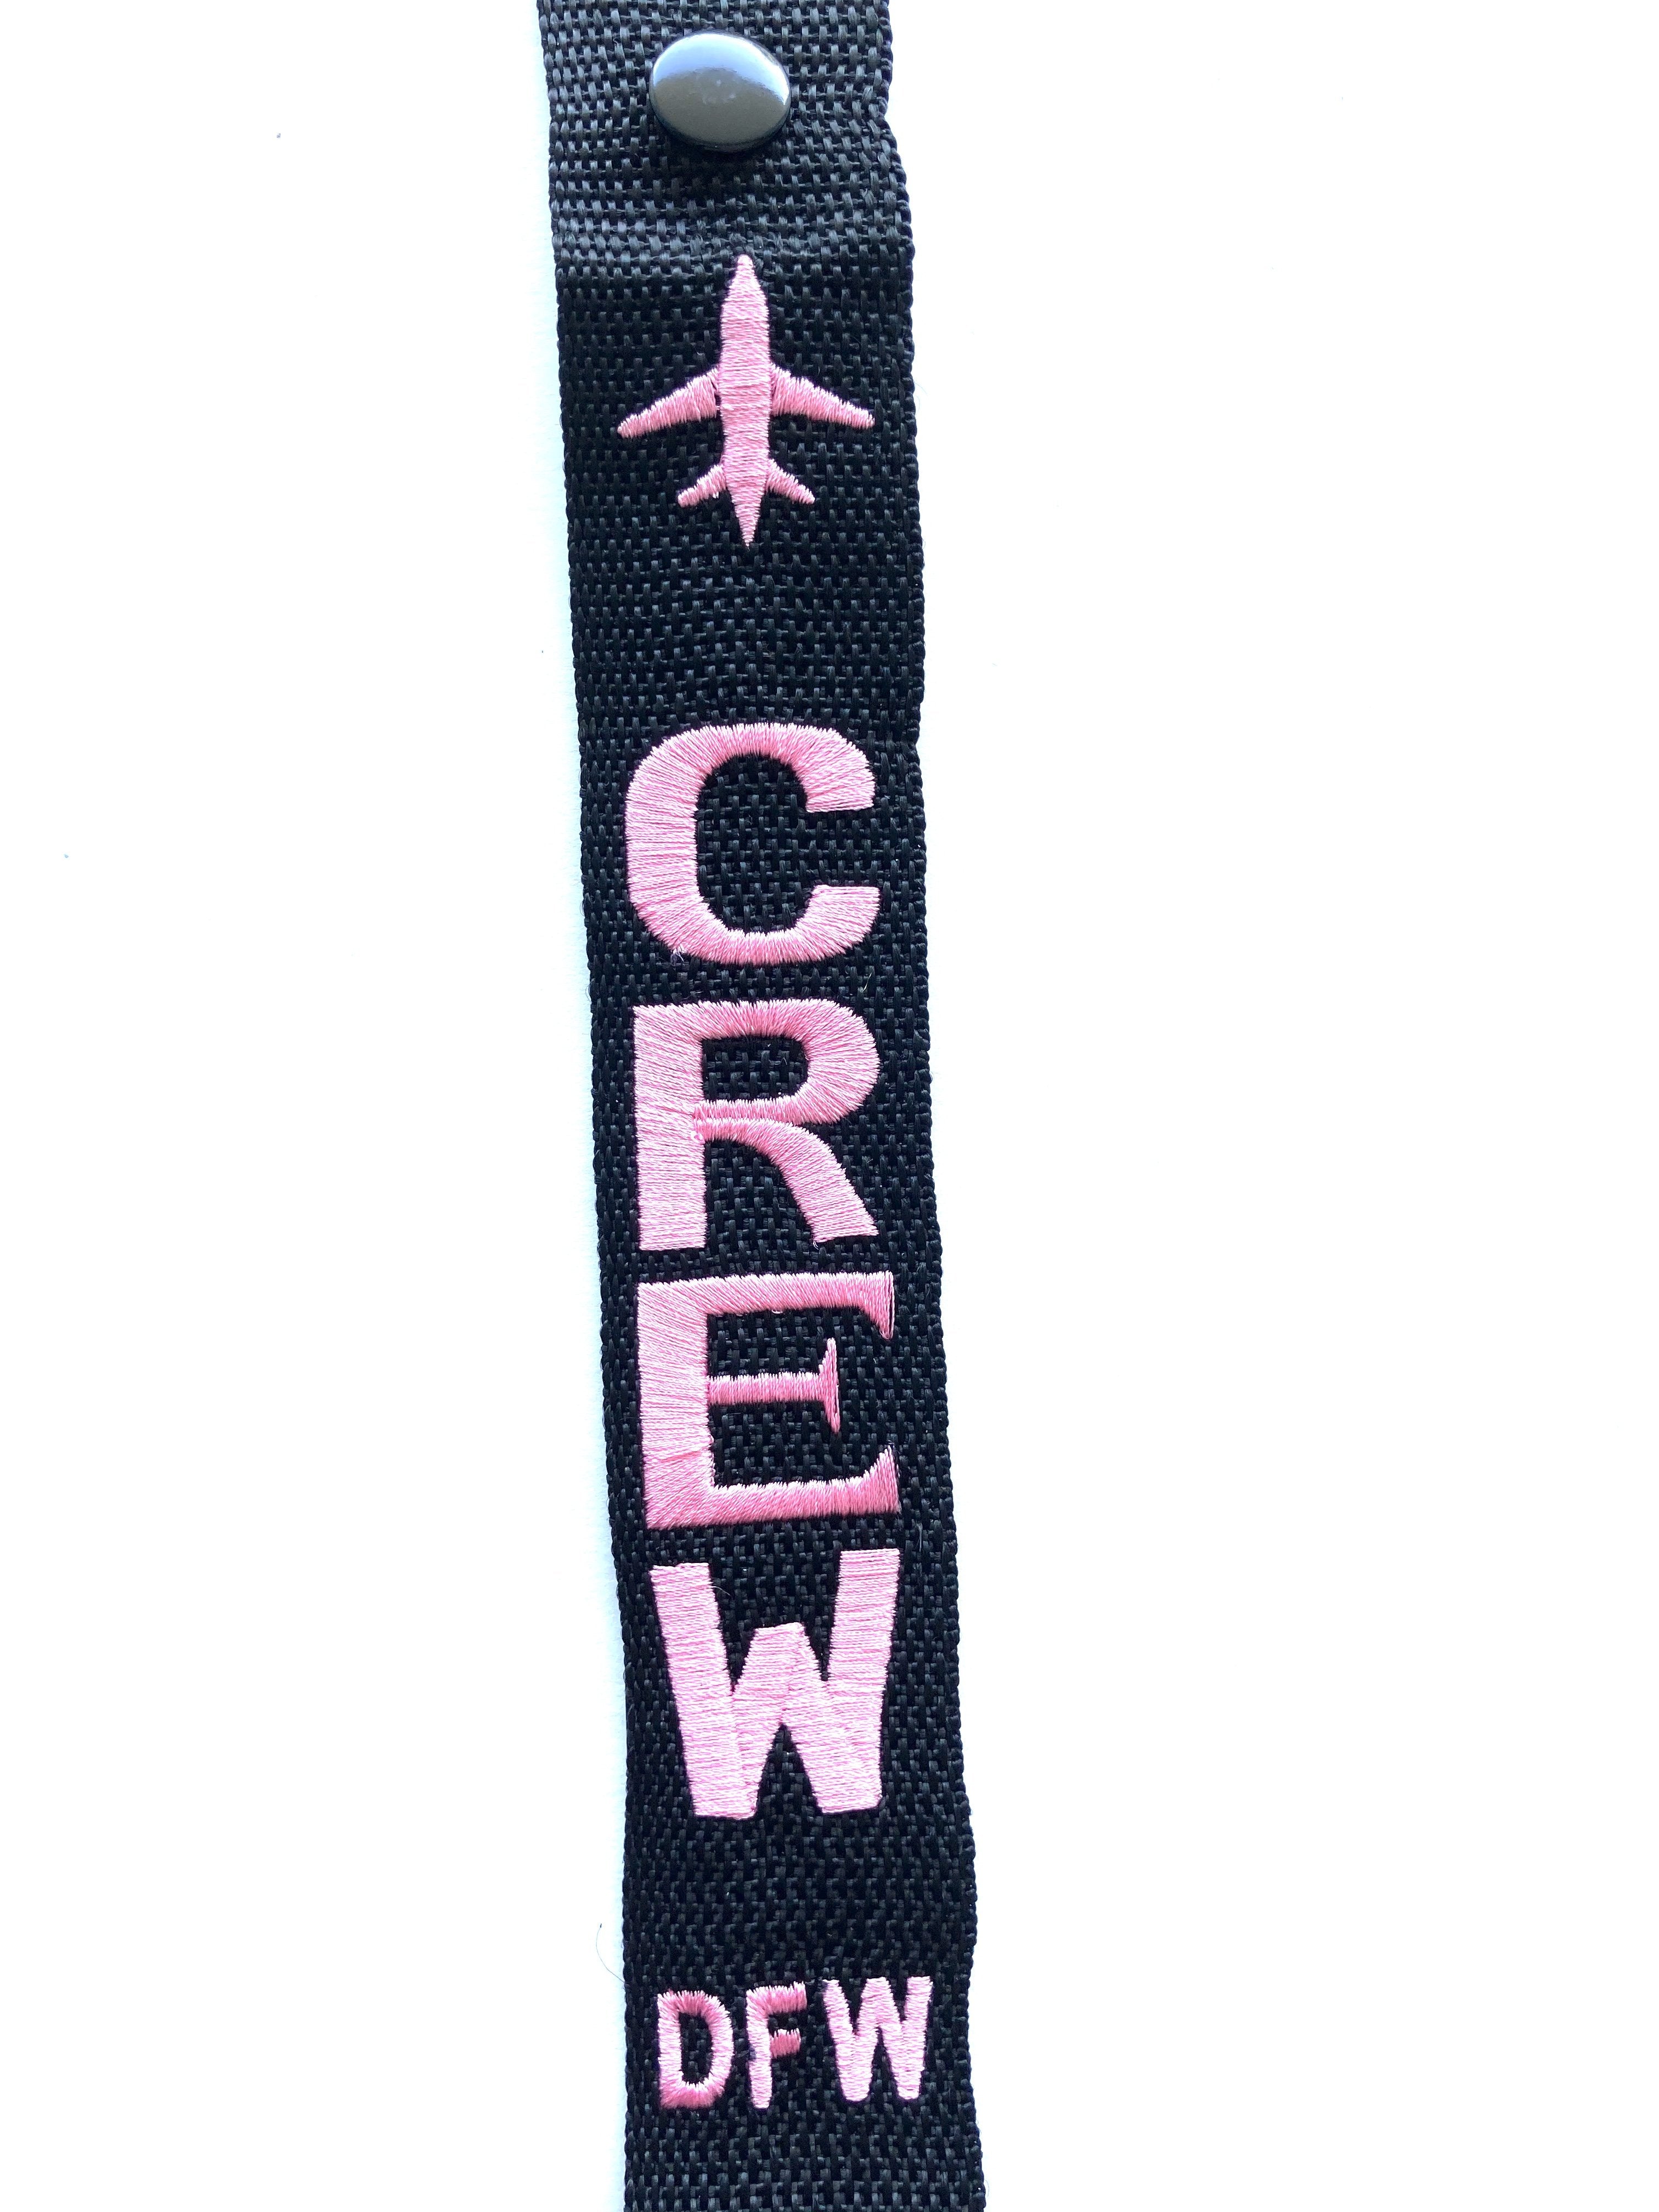 CREW Luggage Tag - DFW Pink